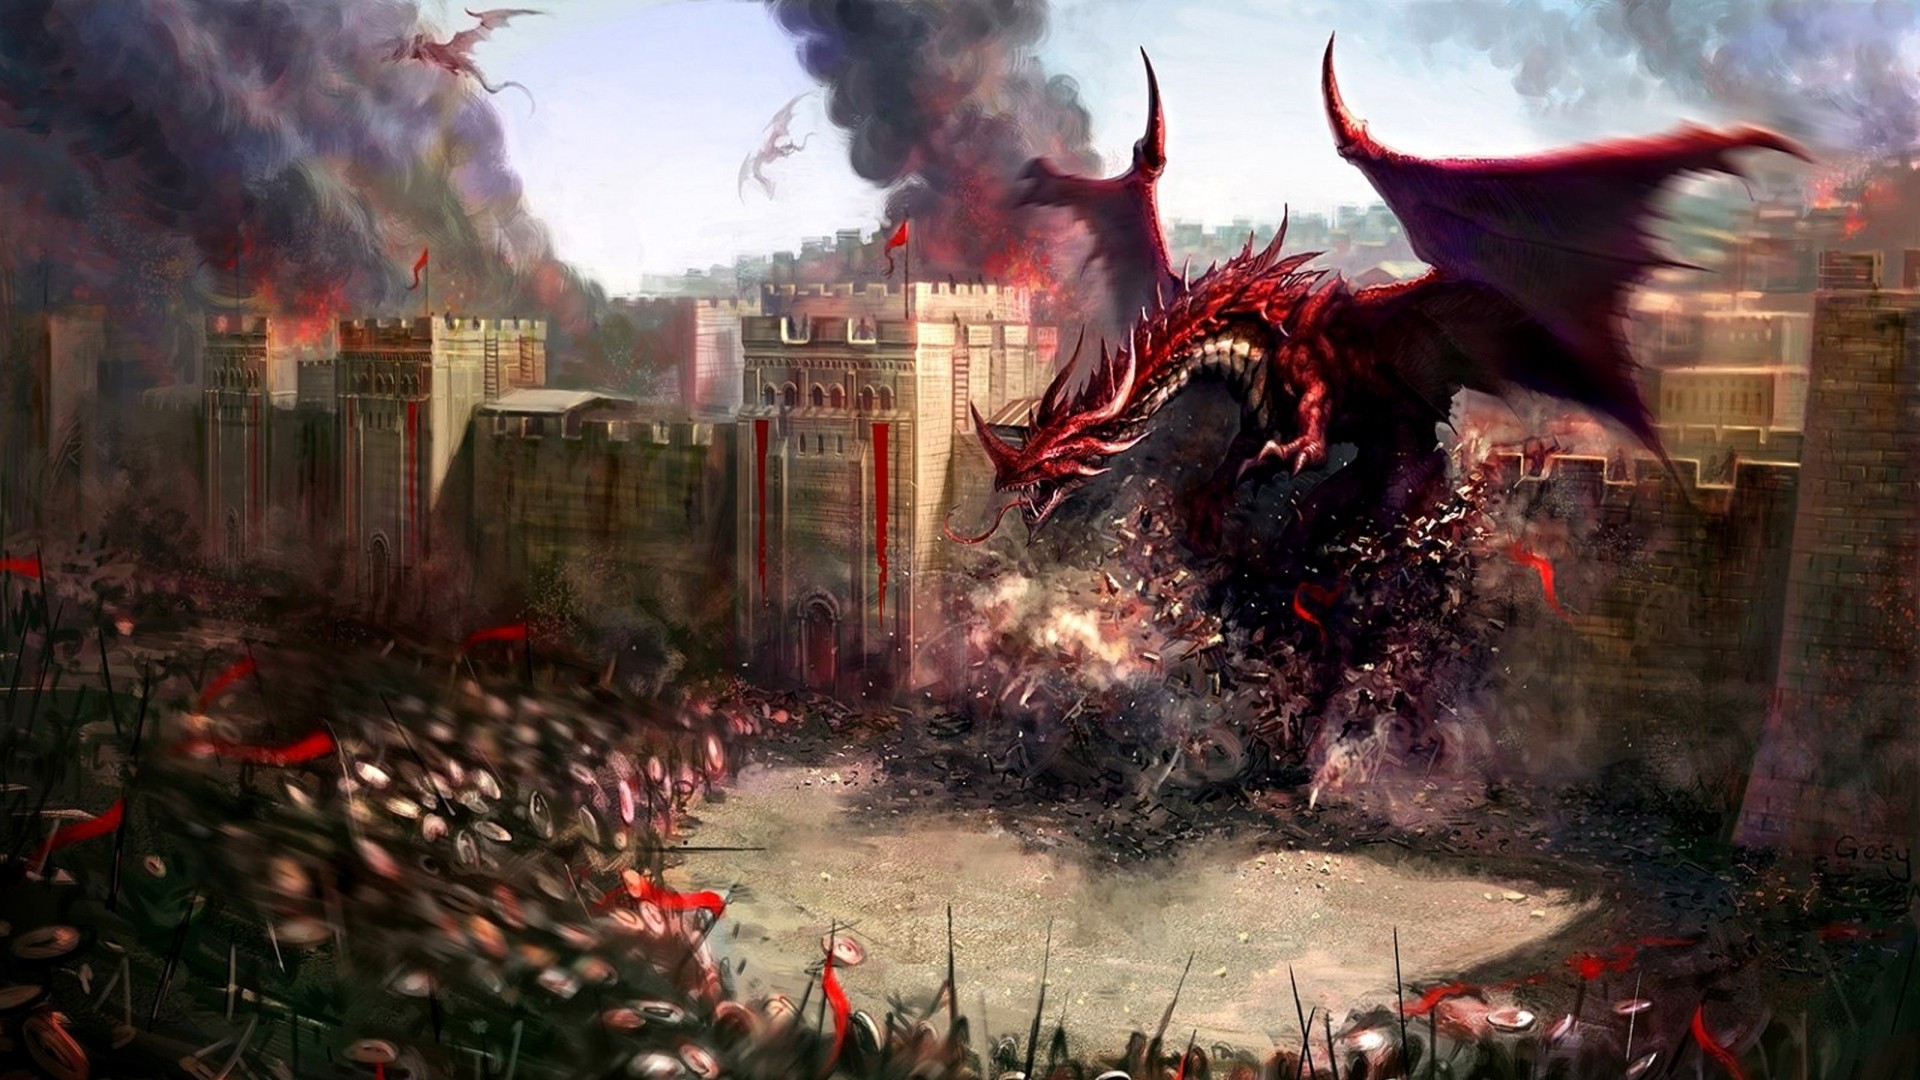 Dragon Fantasy Art Creature Battle 1920x1080